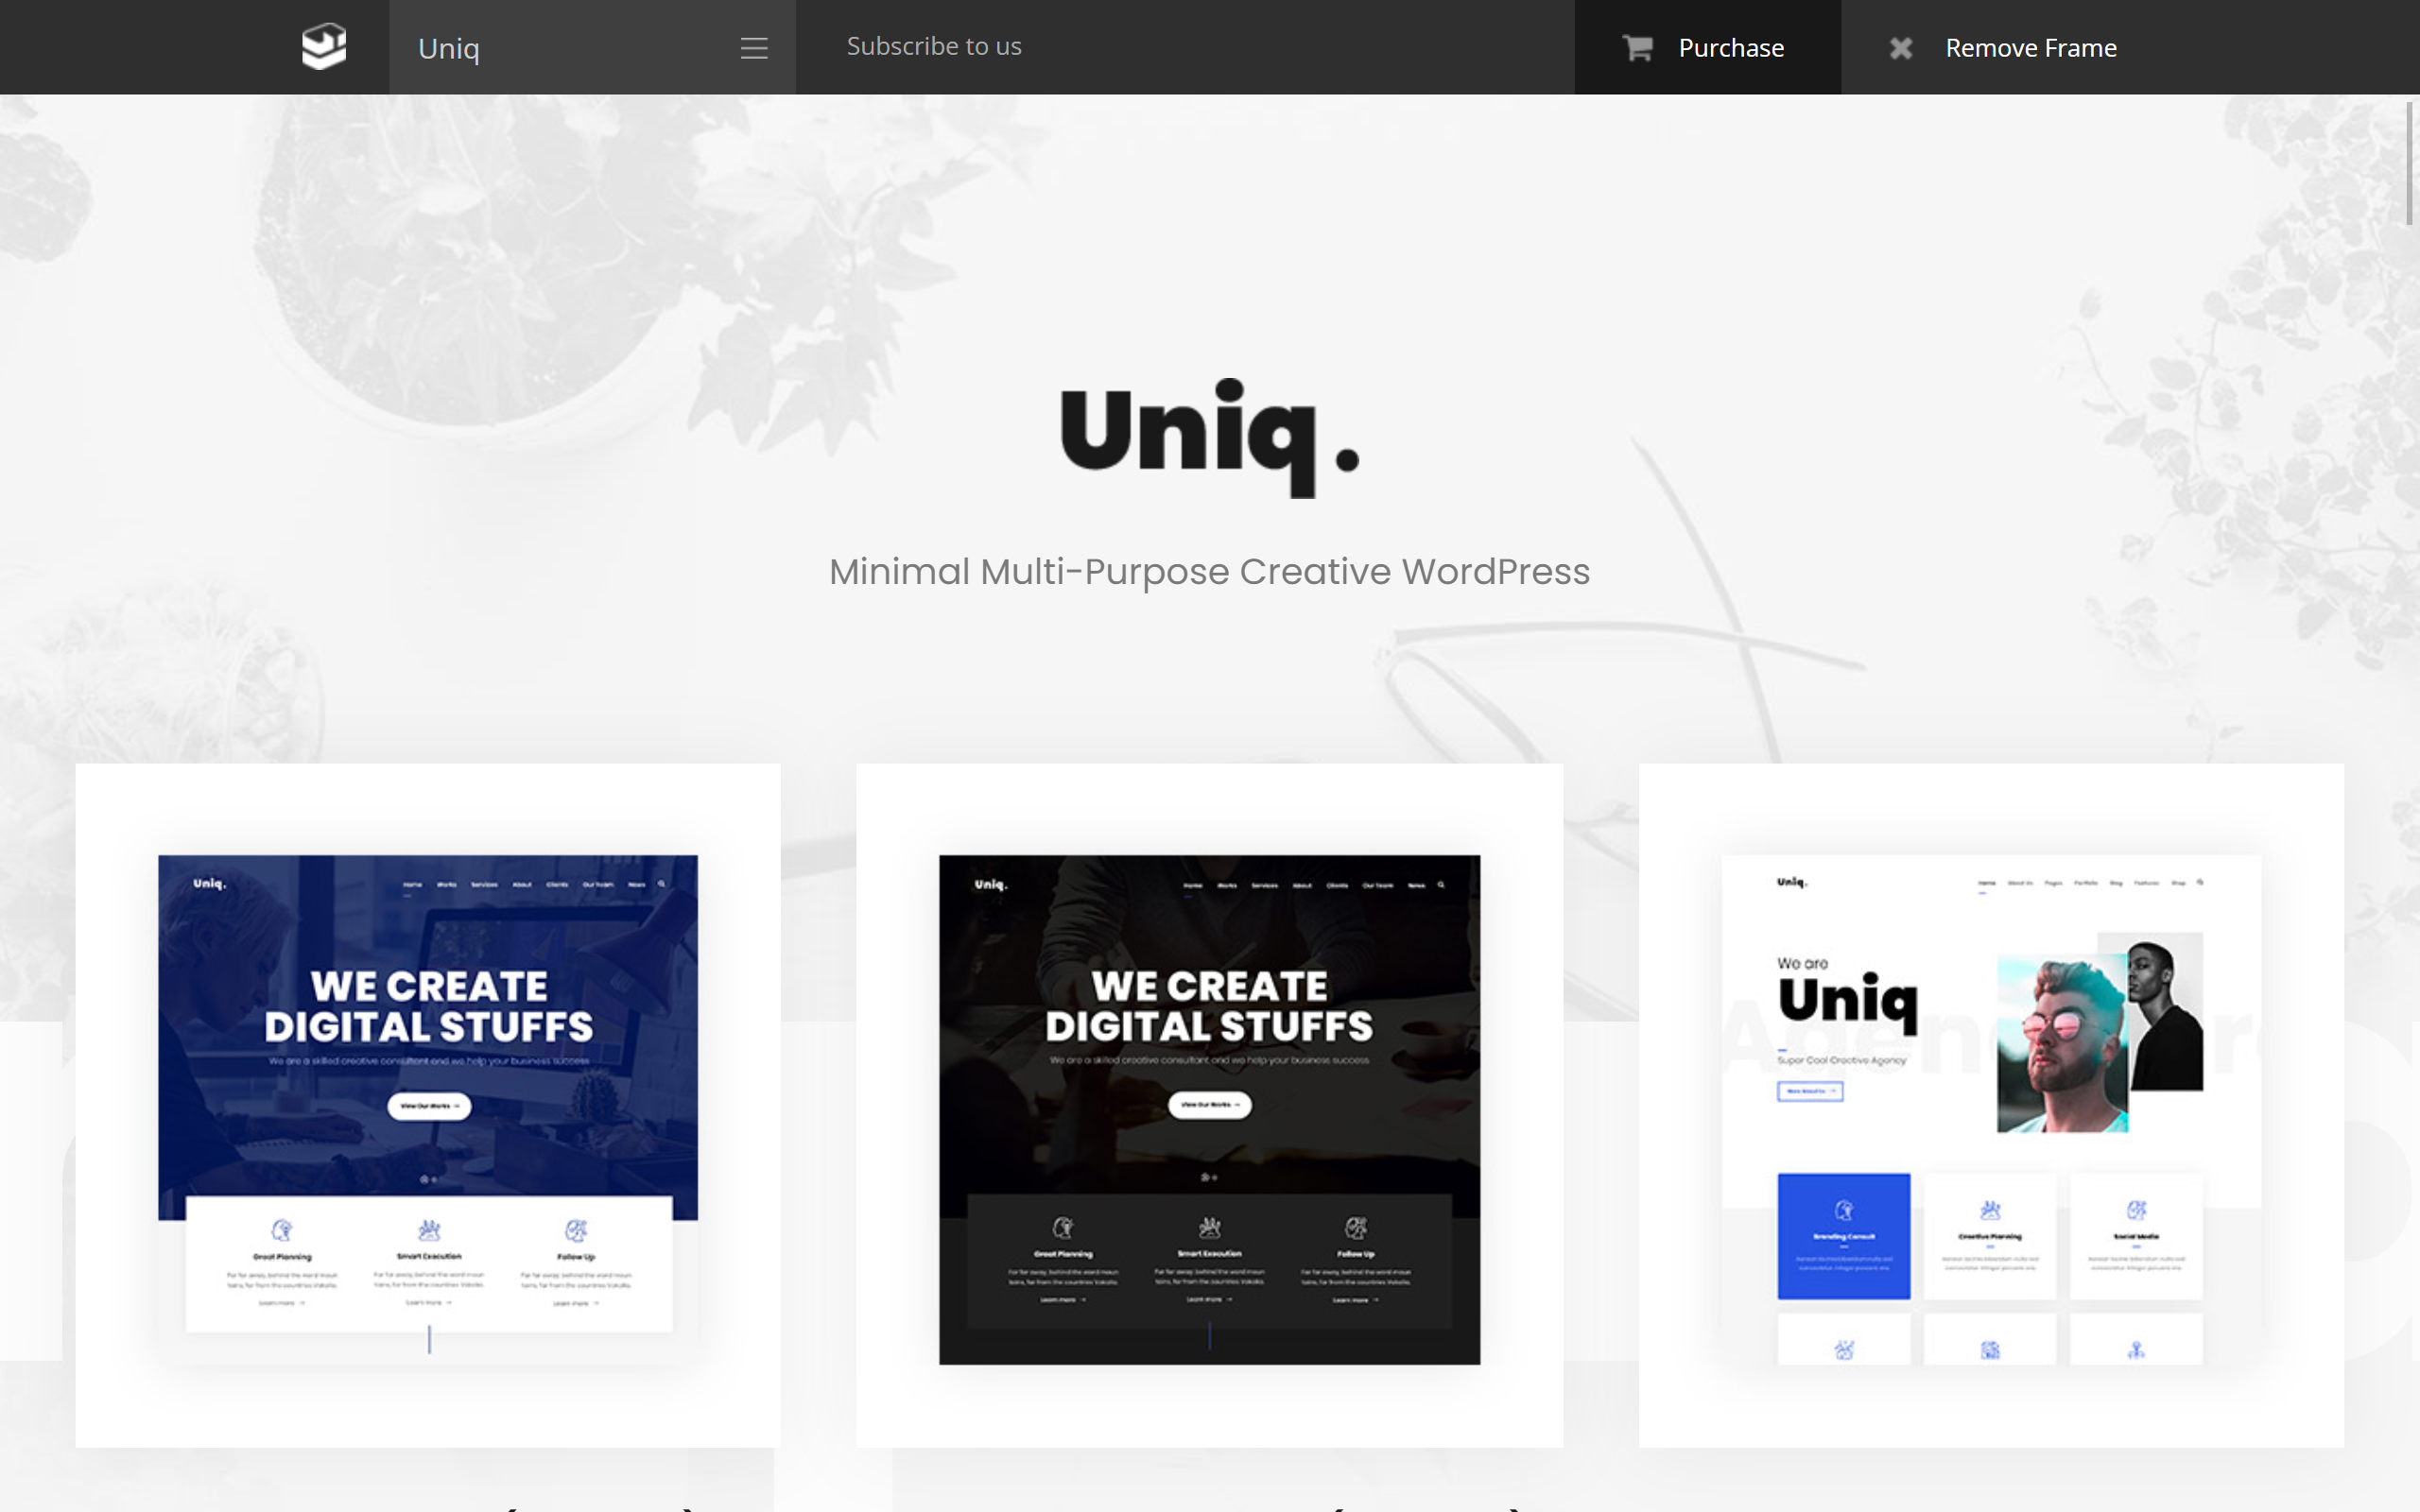 Uniq minimalist WordPress theme